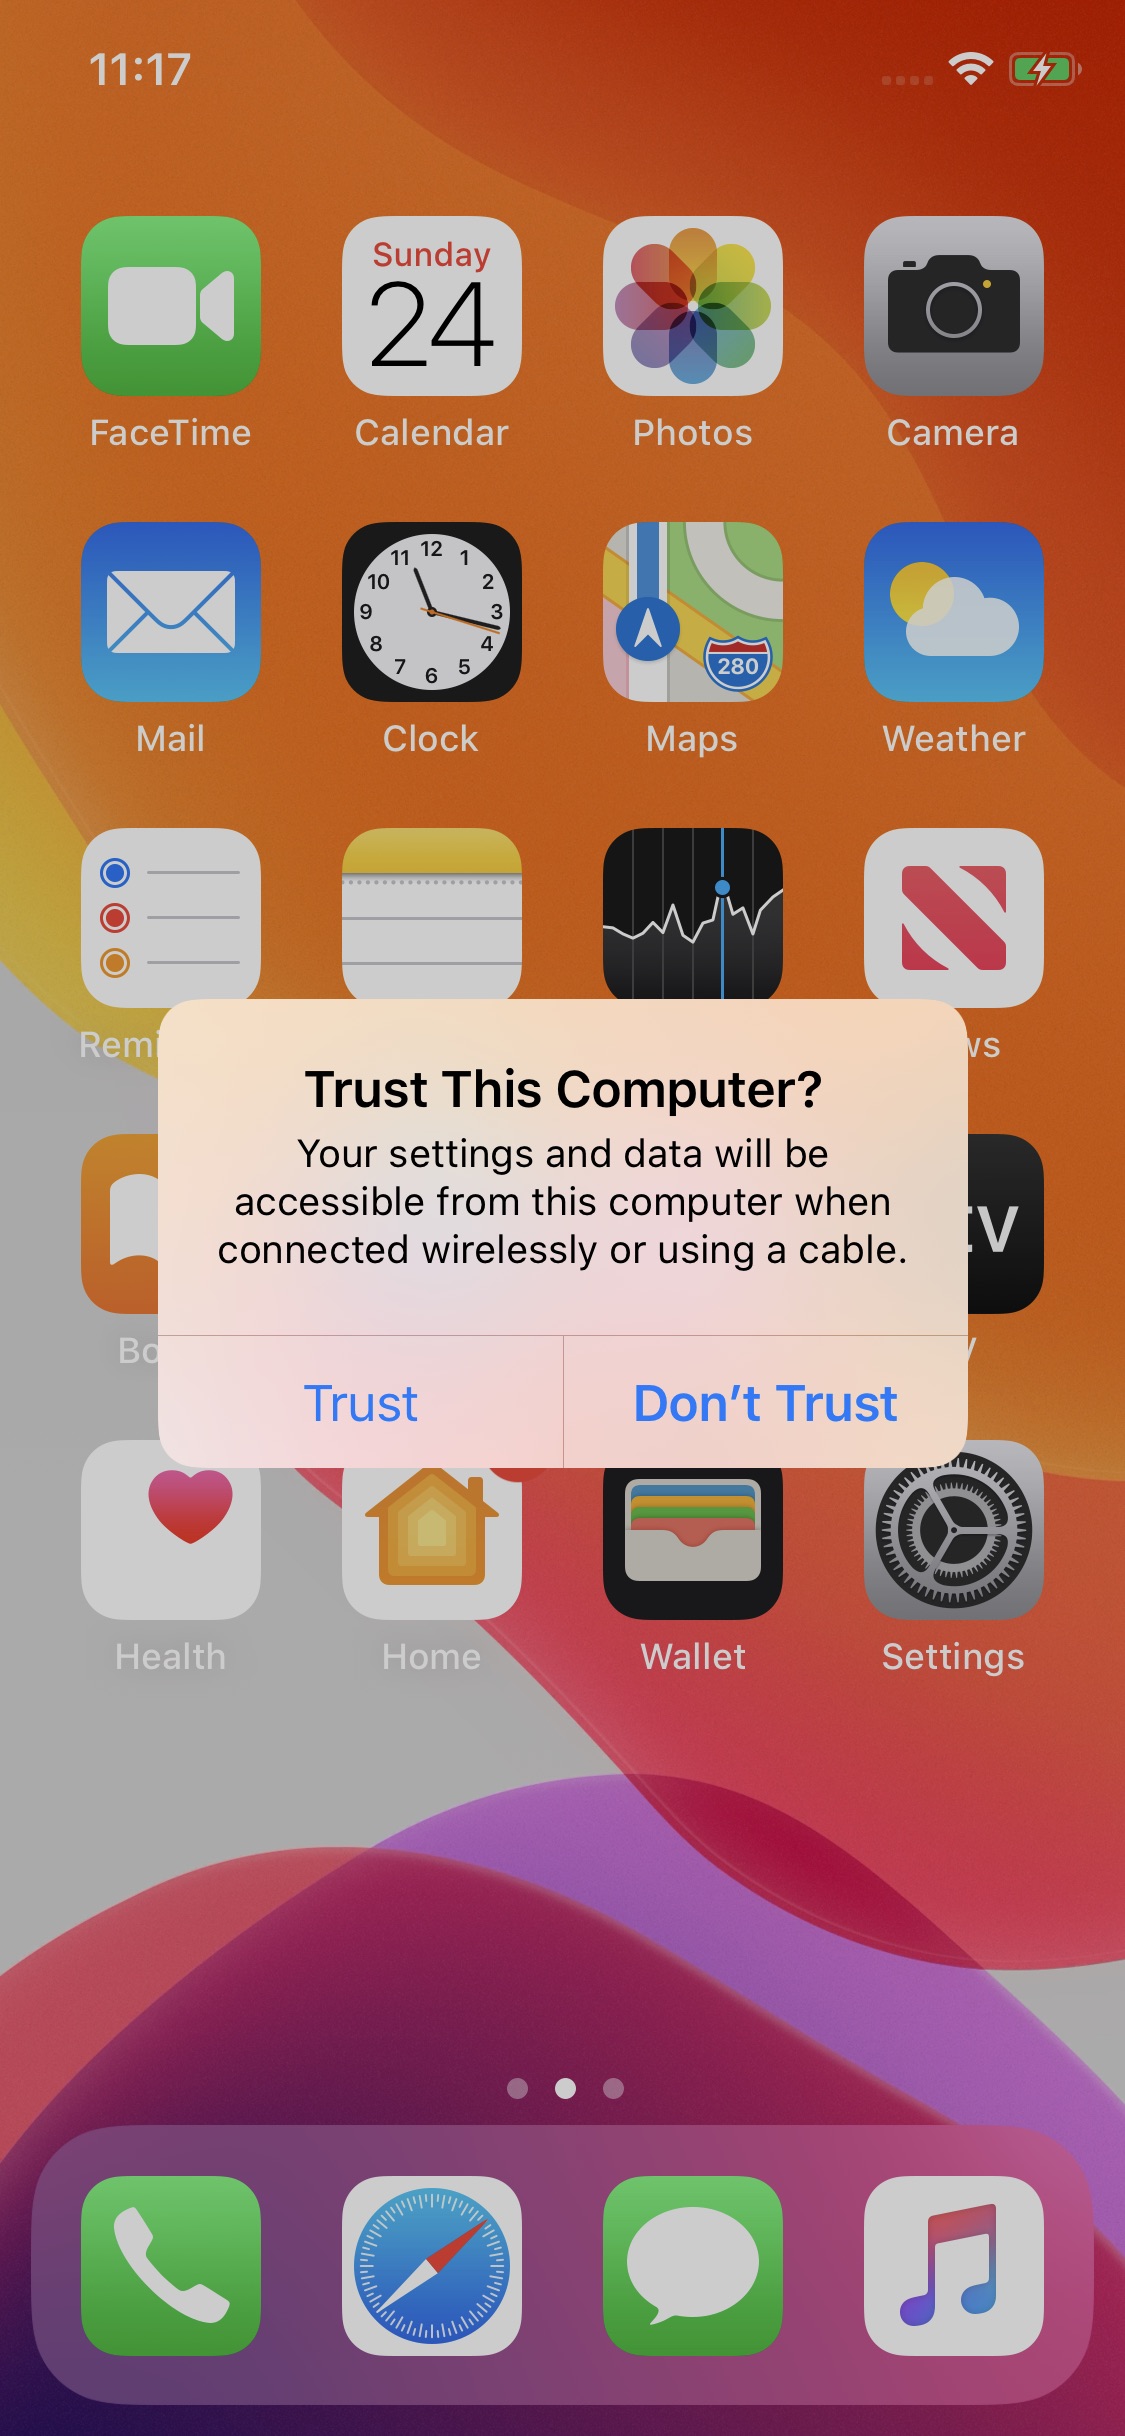 How to Jailbreak Your iPhone on iOS 13.5 Using Unc0ver (Windows)